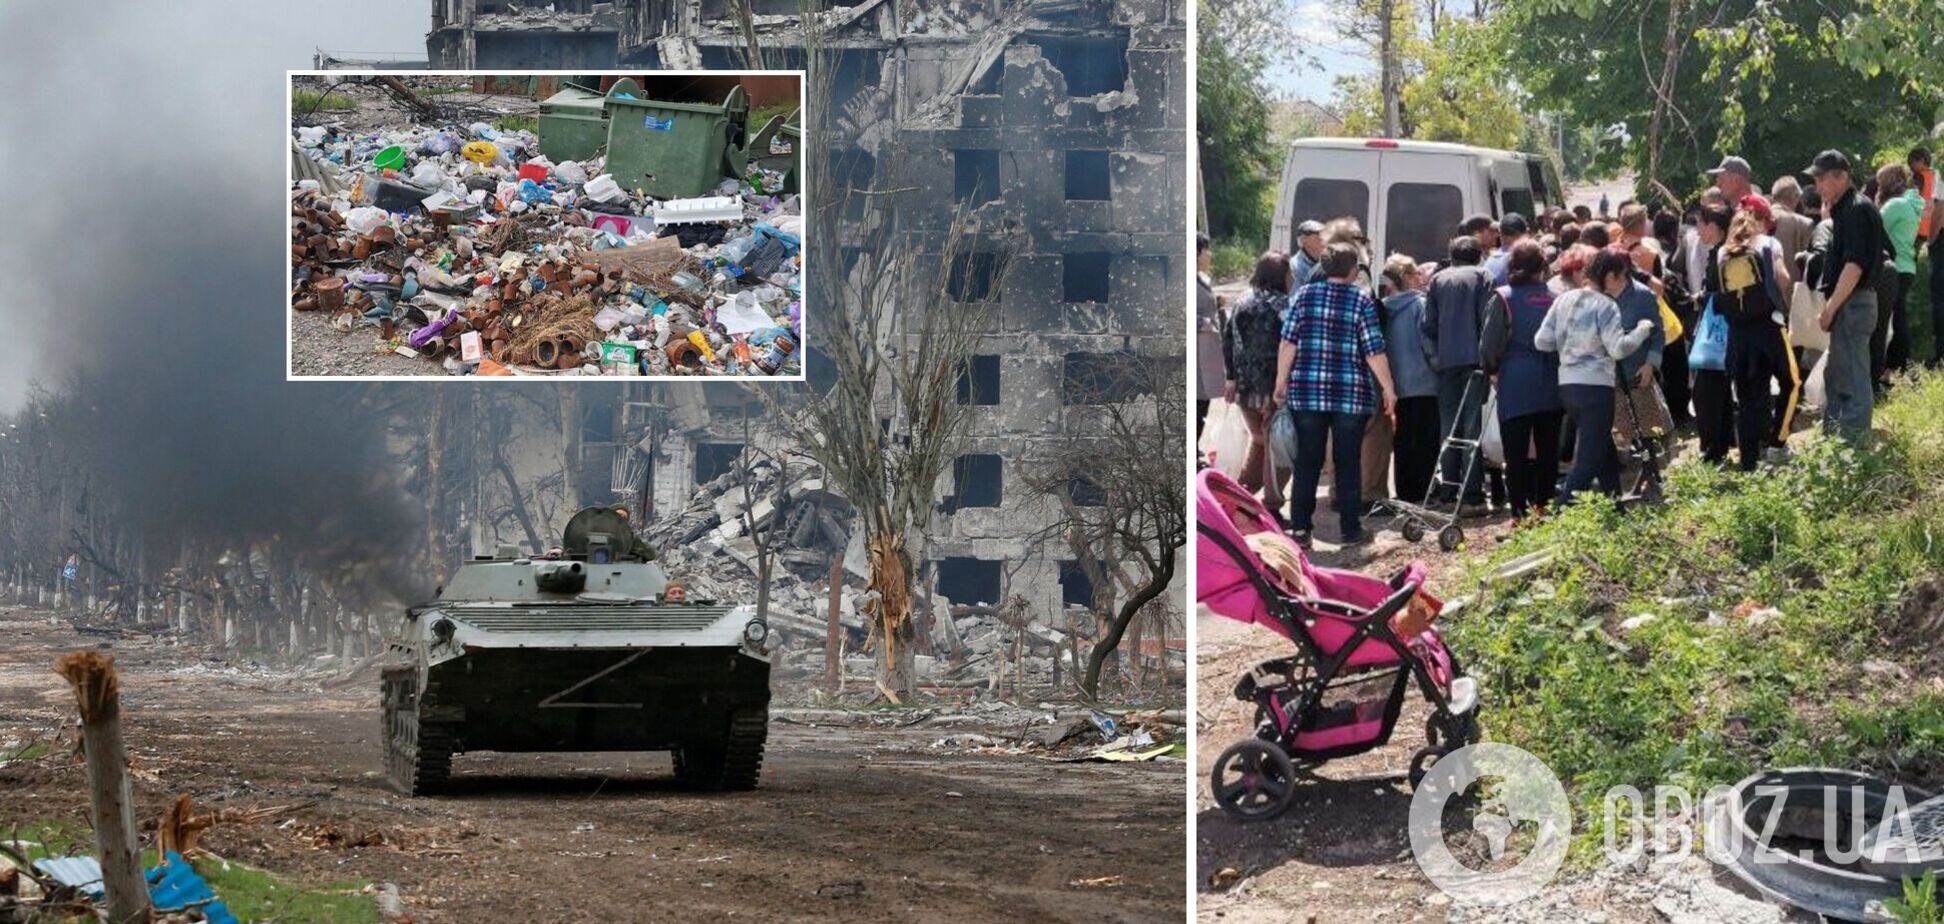 Мусор и очереди за гуманитаркой: в Мариуполе показали реалии в двух фото